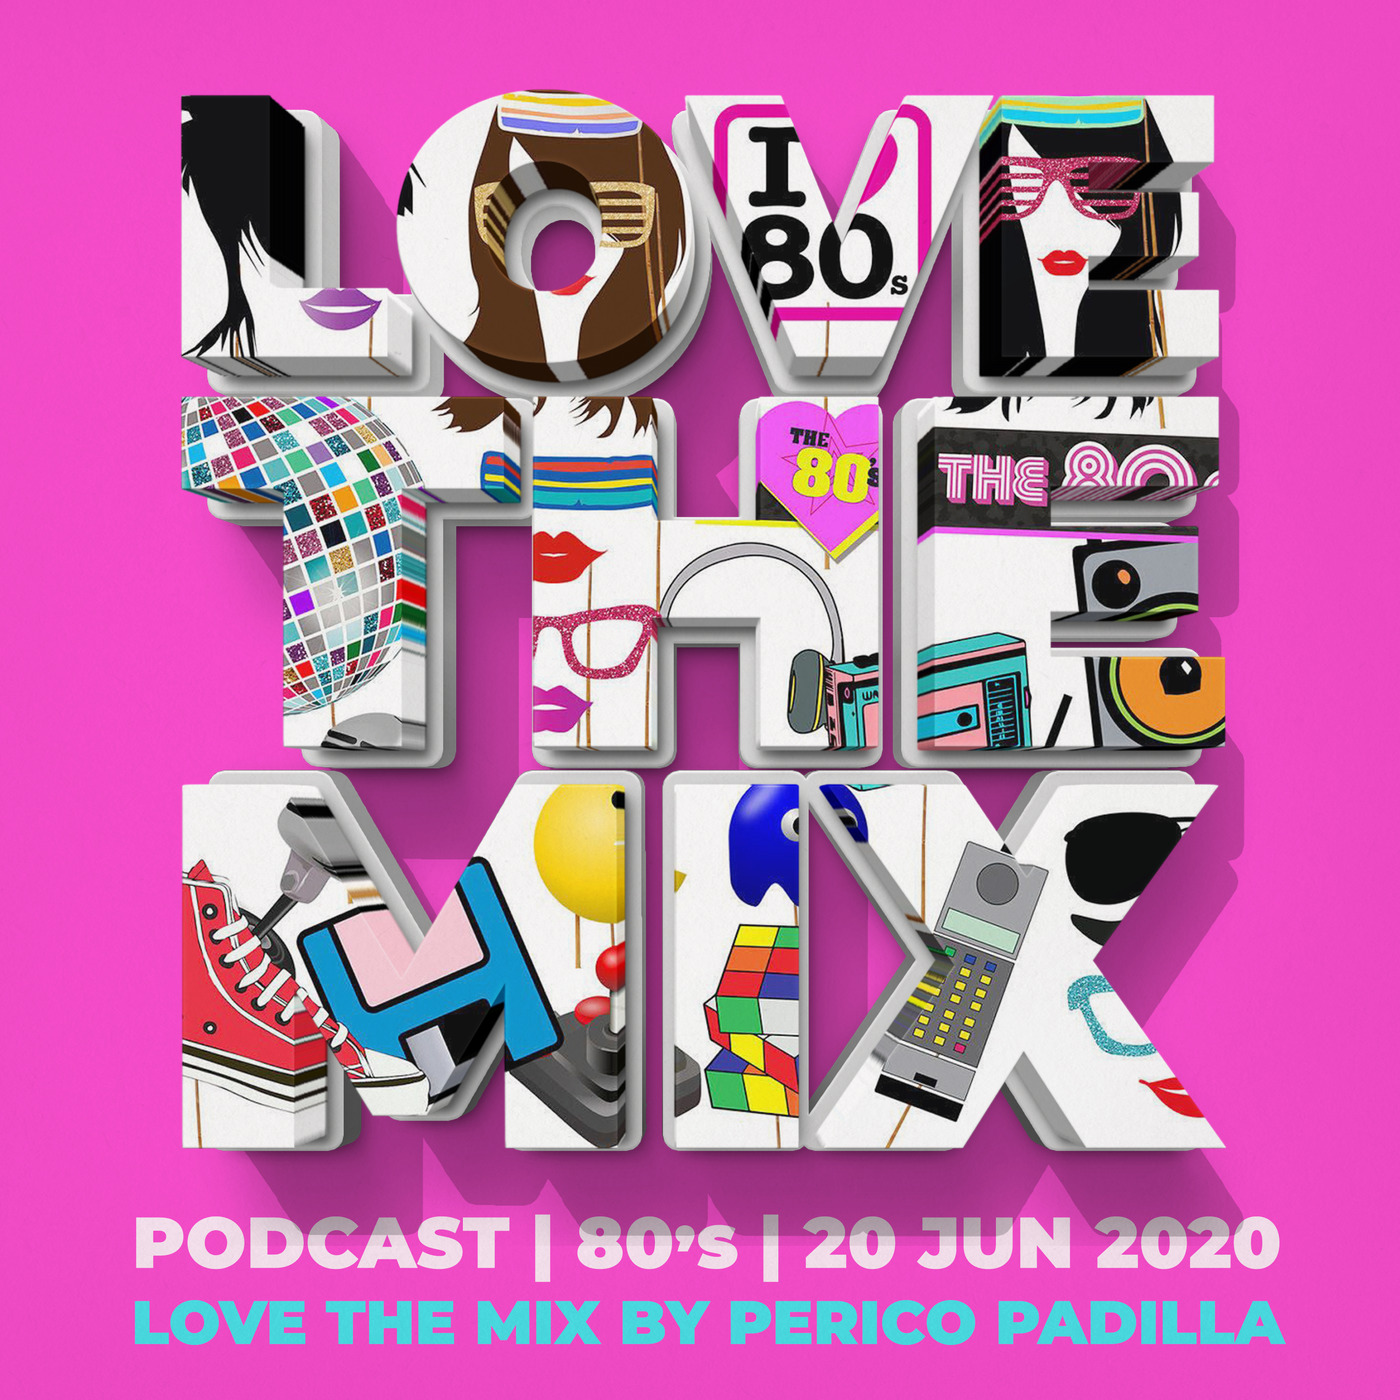 LOVE THE MIX PODCAST | 80's | 20 JUN 2020 By Perico Padilla